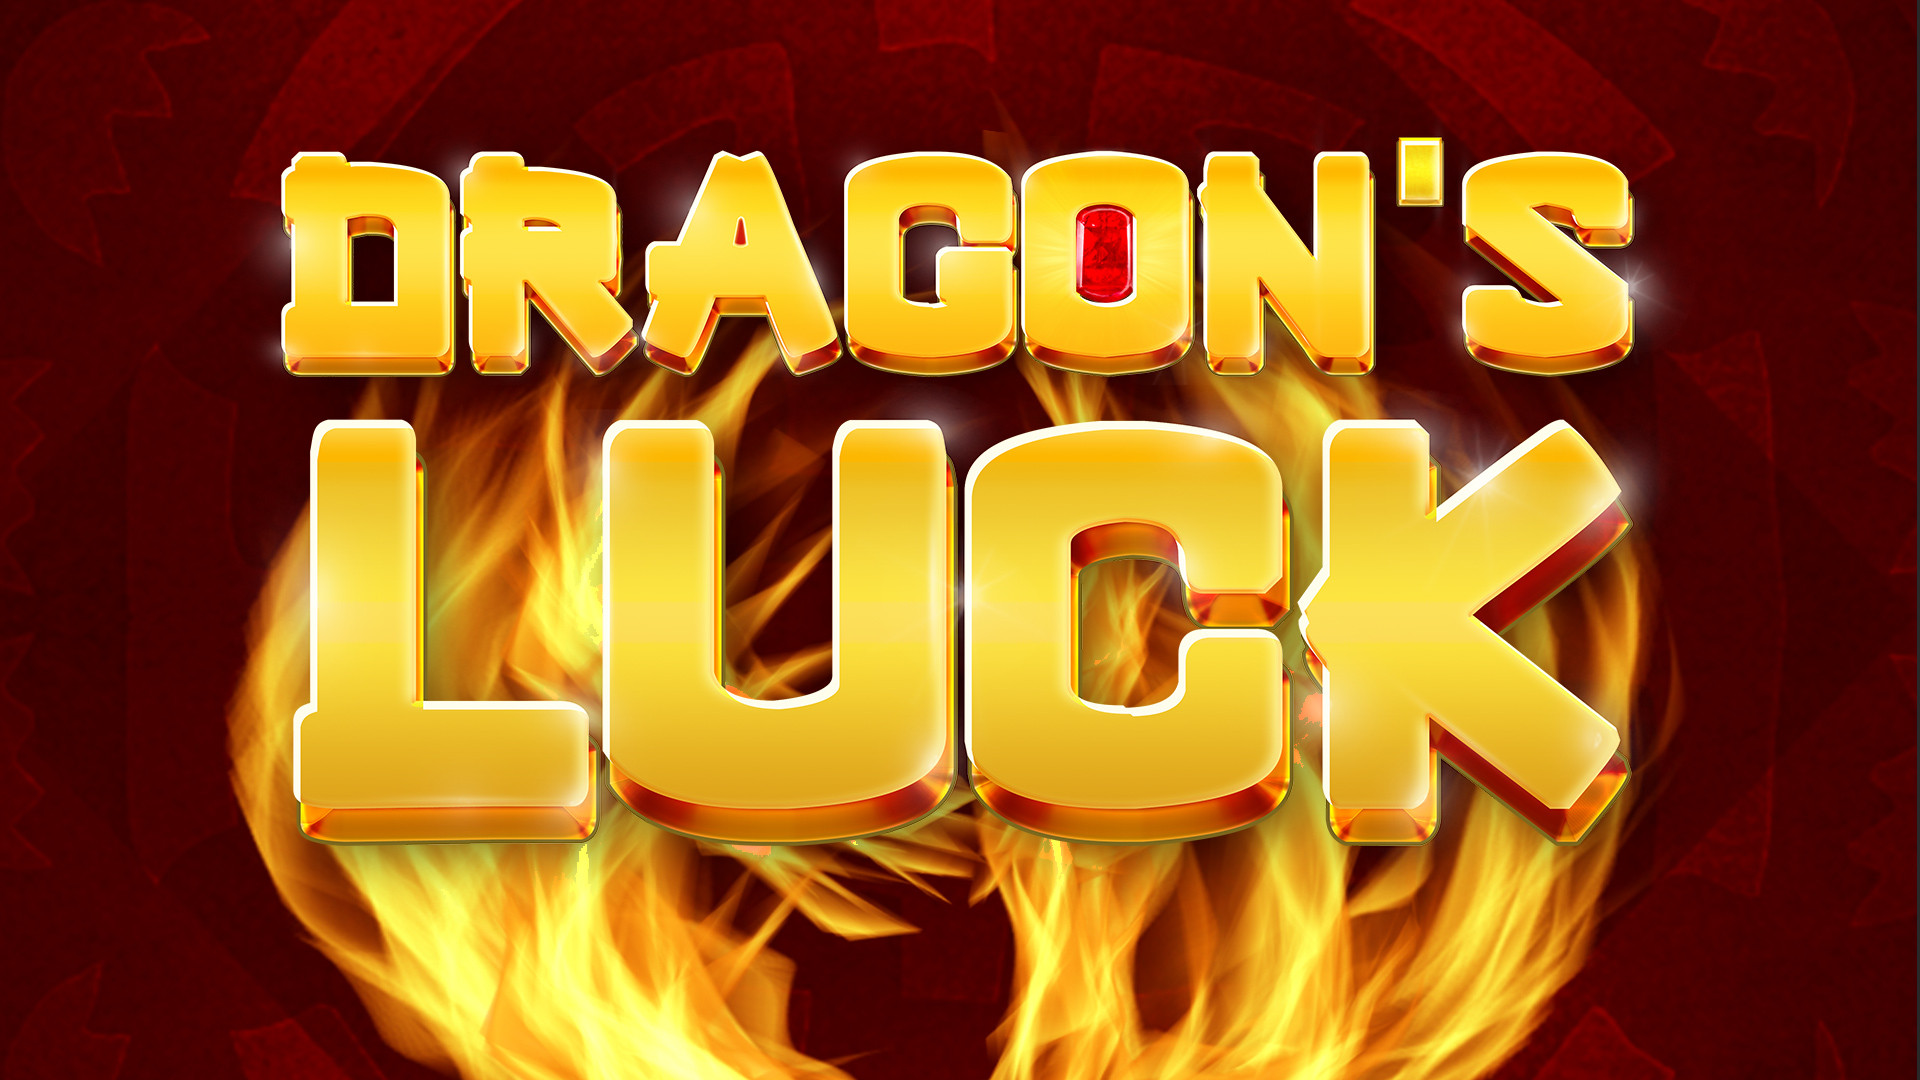 Dragon's Luck